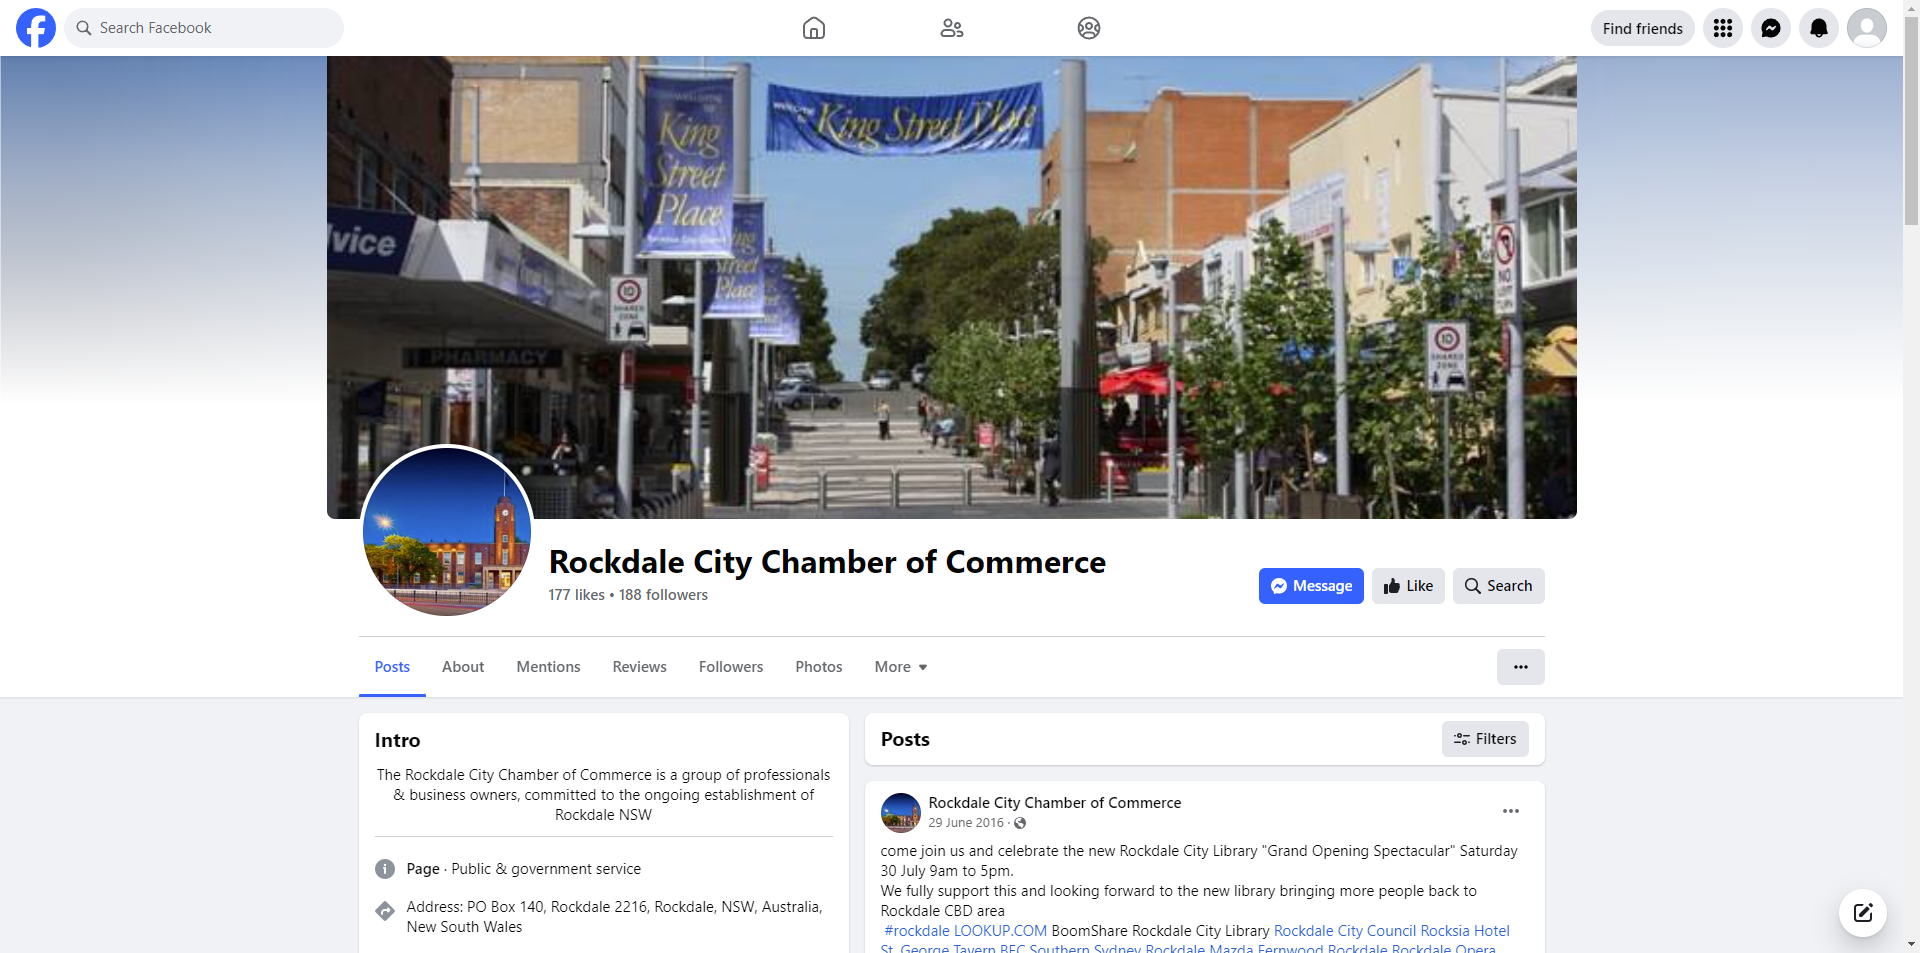 Rockdale City Chamber of Commerce